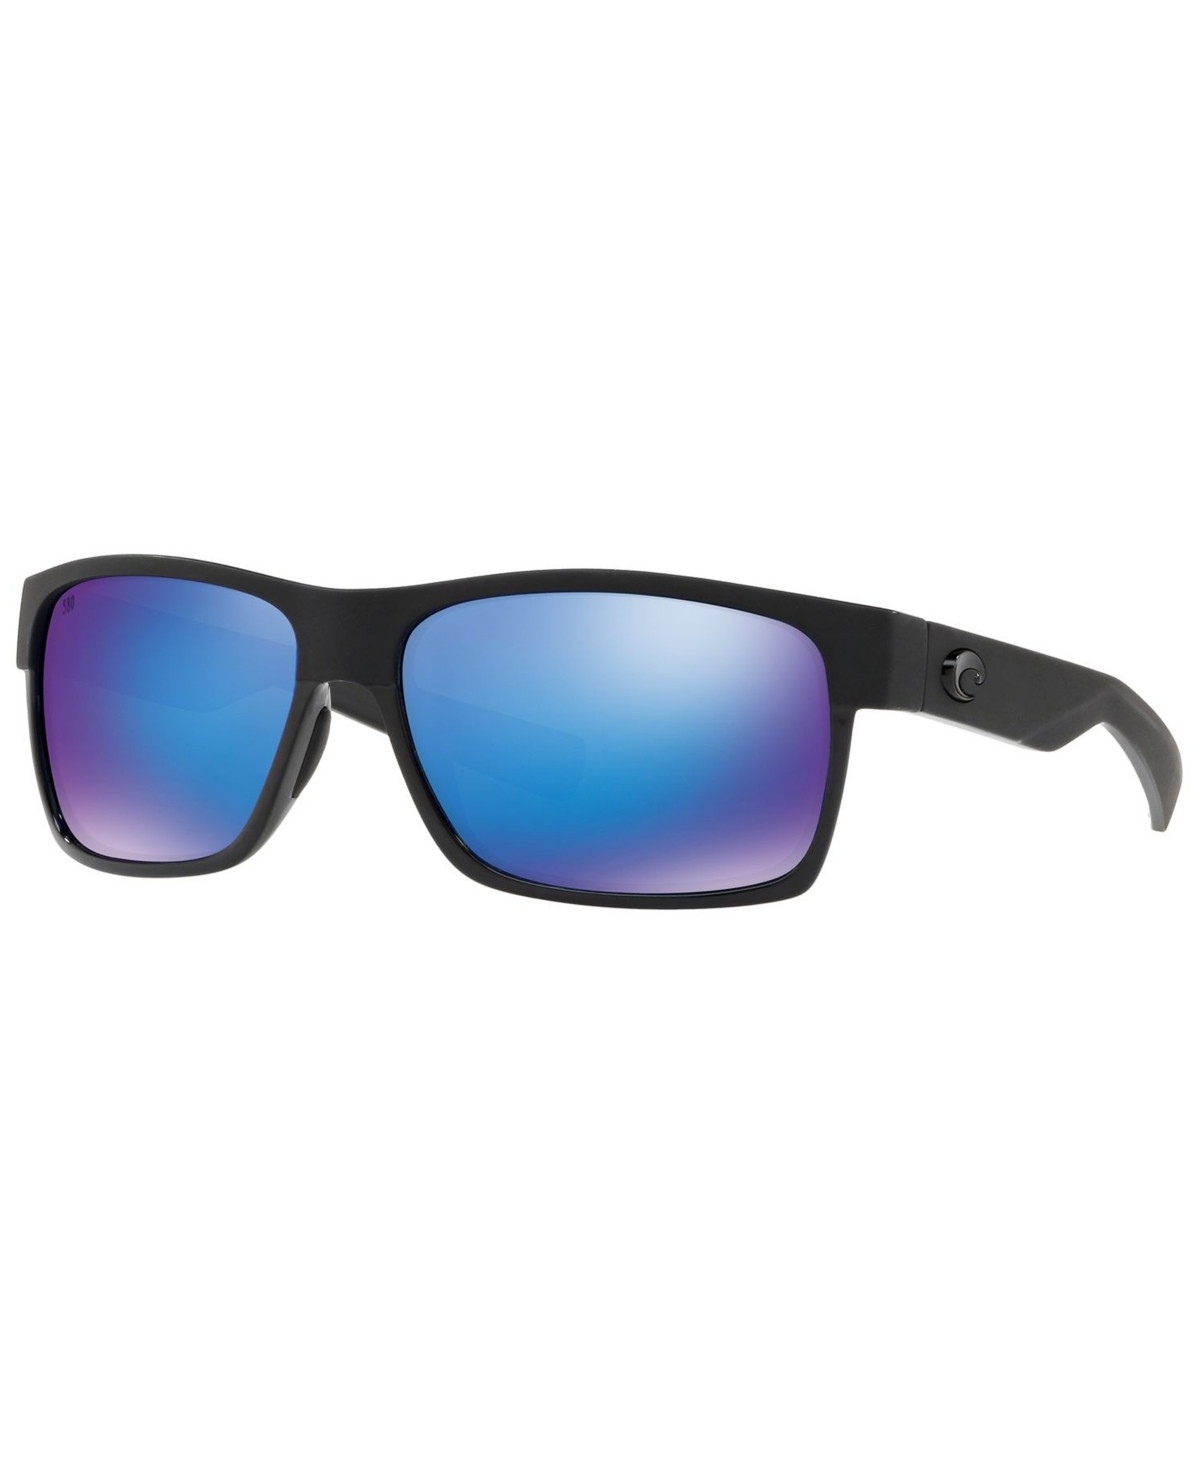 Polarized Sunglasses, Half Moon 60 - BLACK/ BLUE MIRROR POLAR